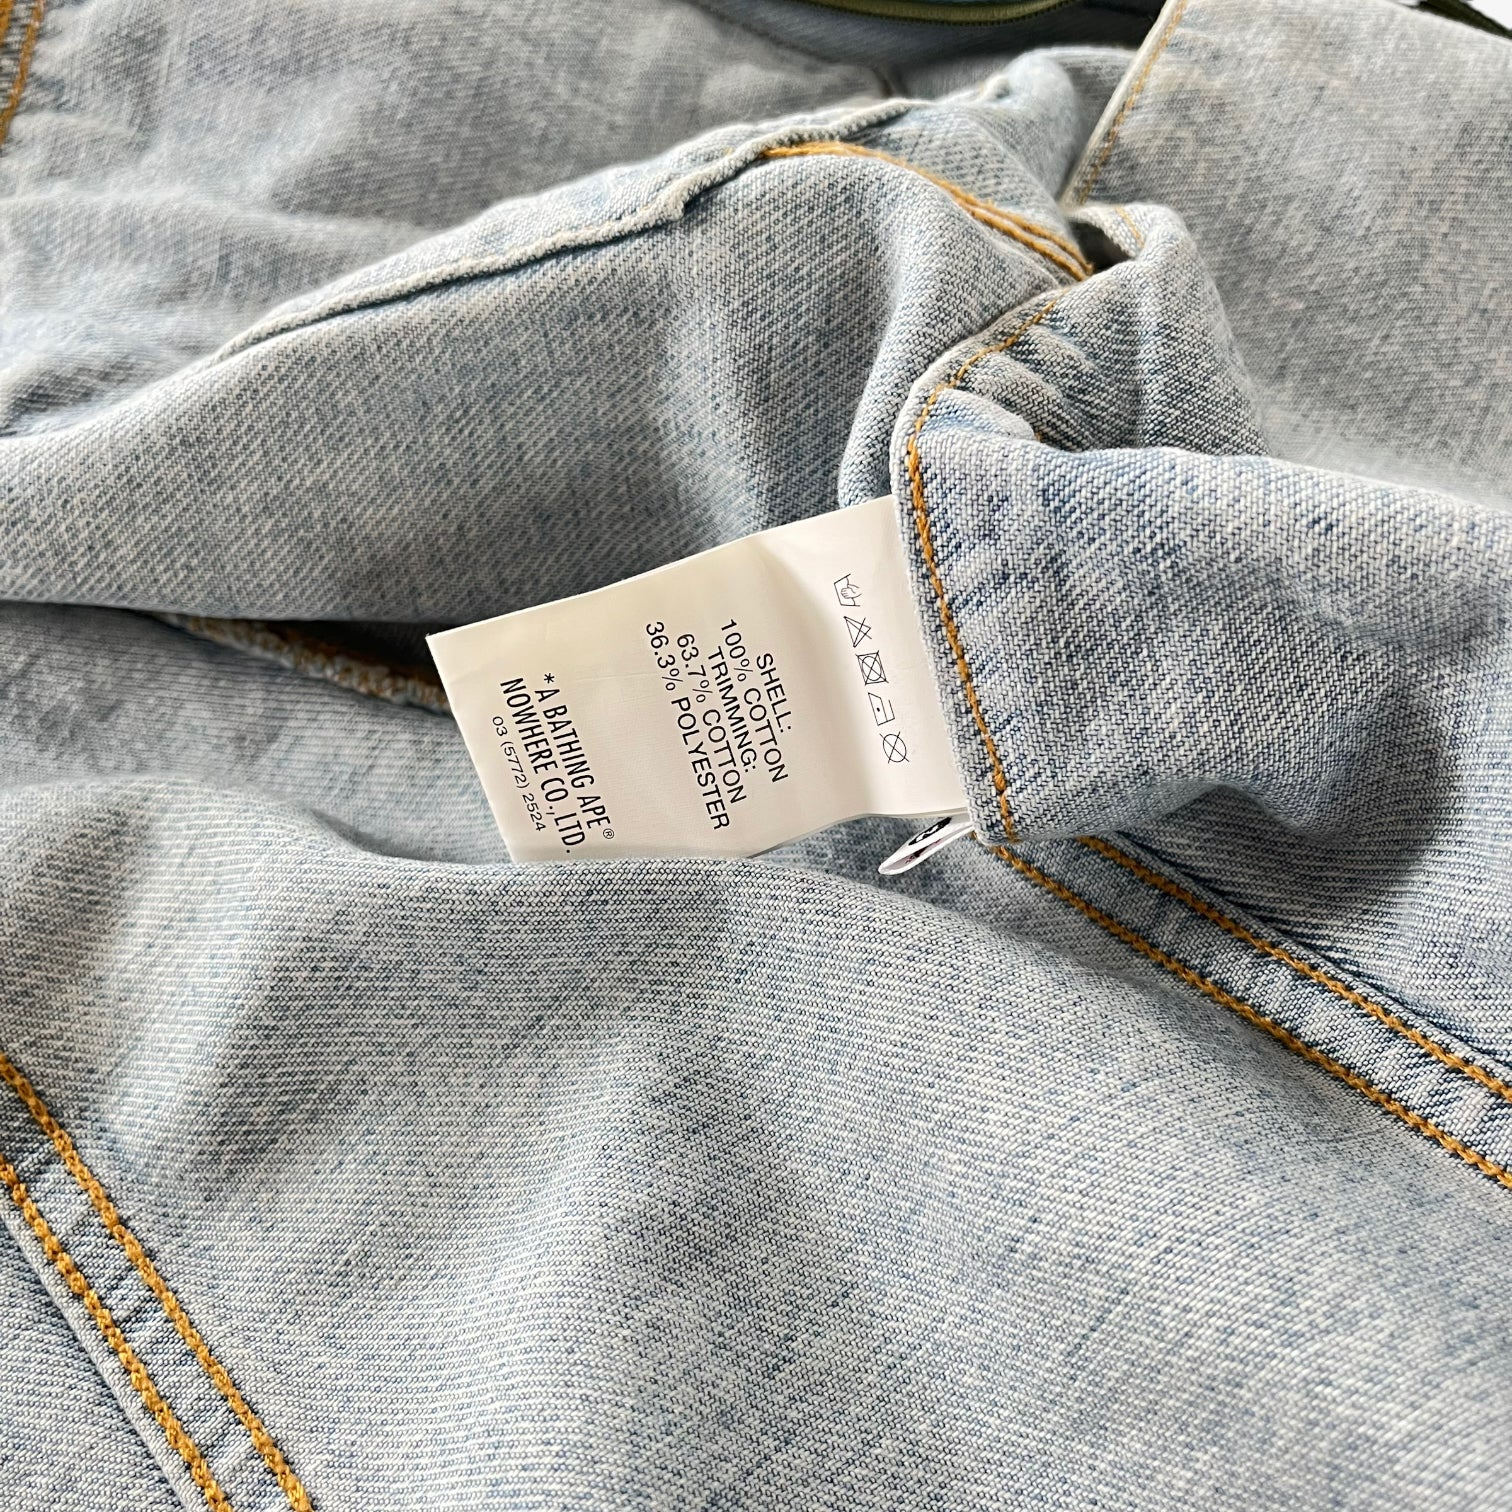 BAPE AAPE Denim Jacket With Removable Hoodie Inside Label - Casspios Dream